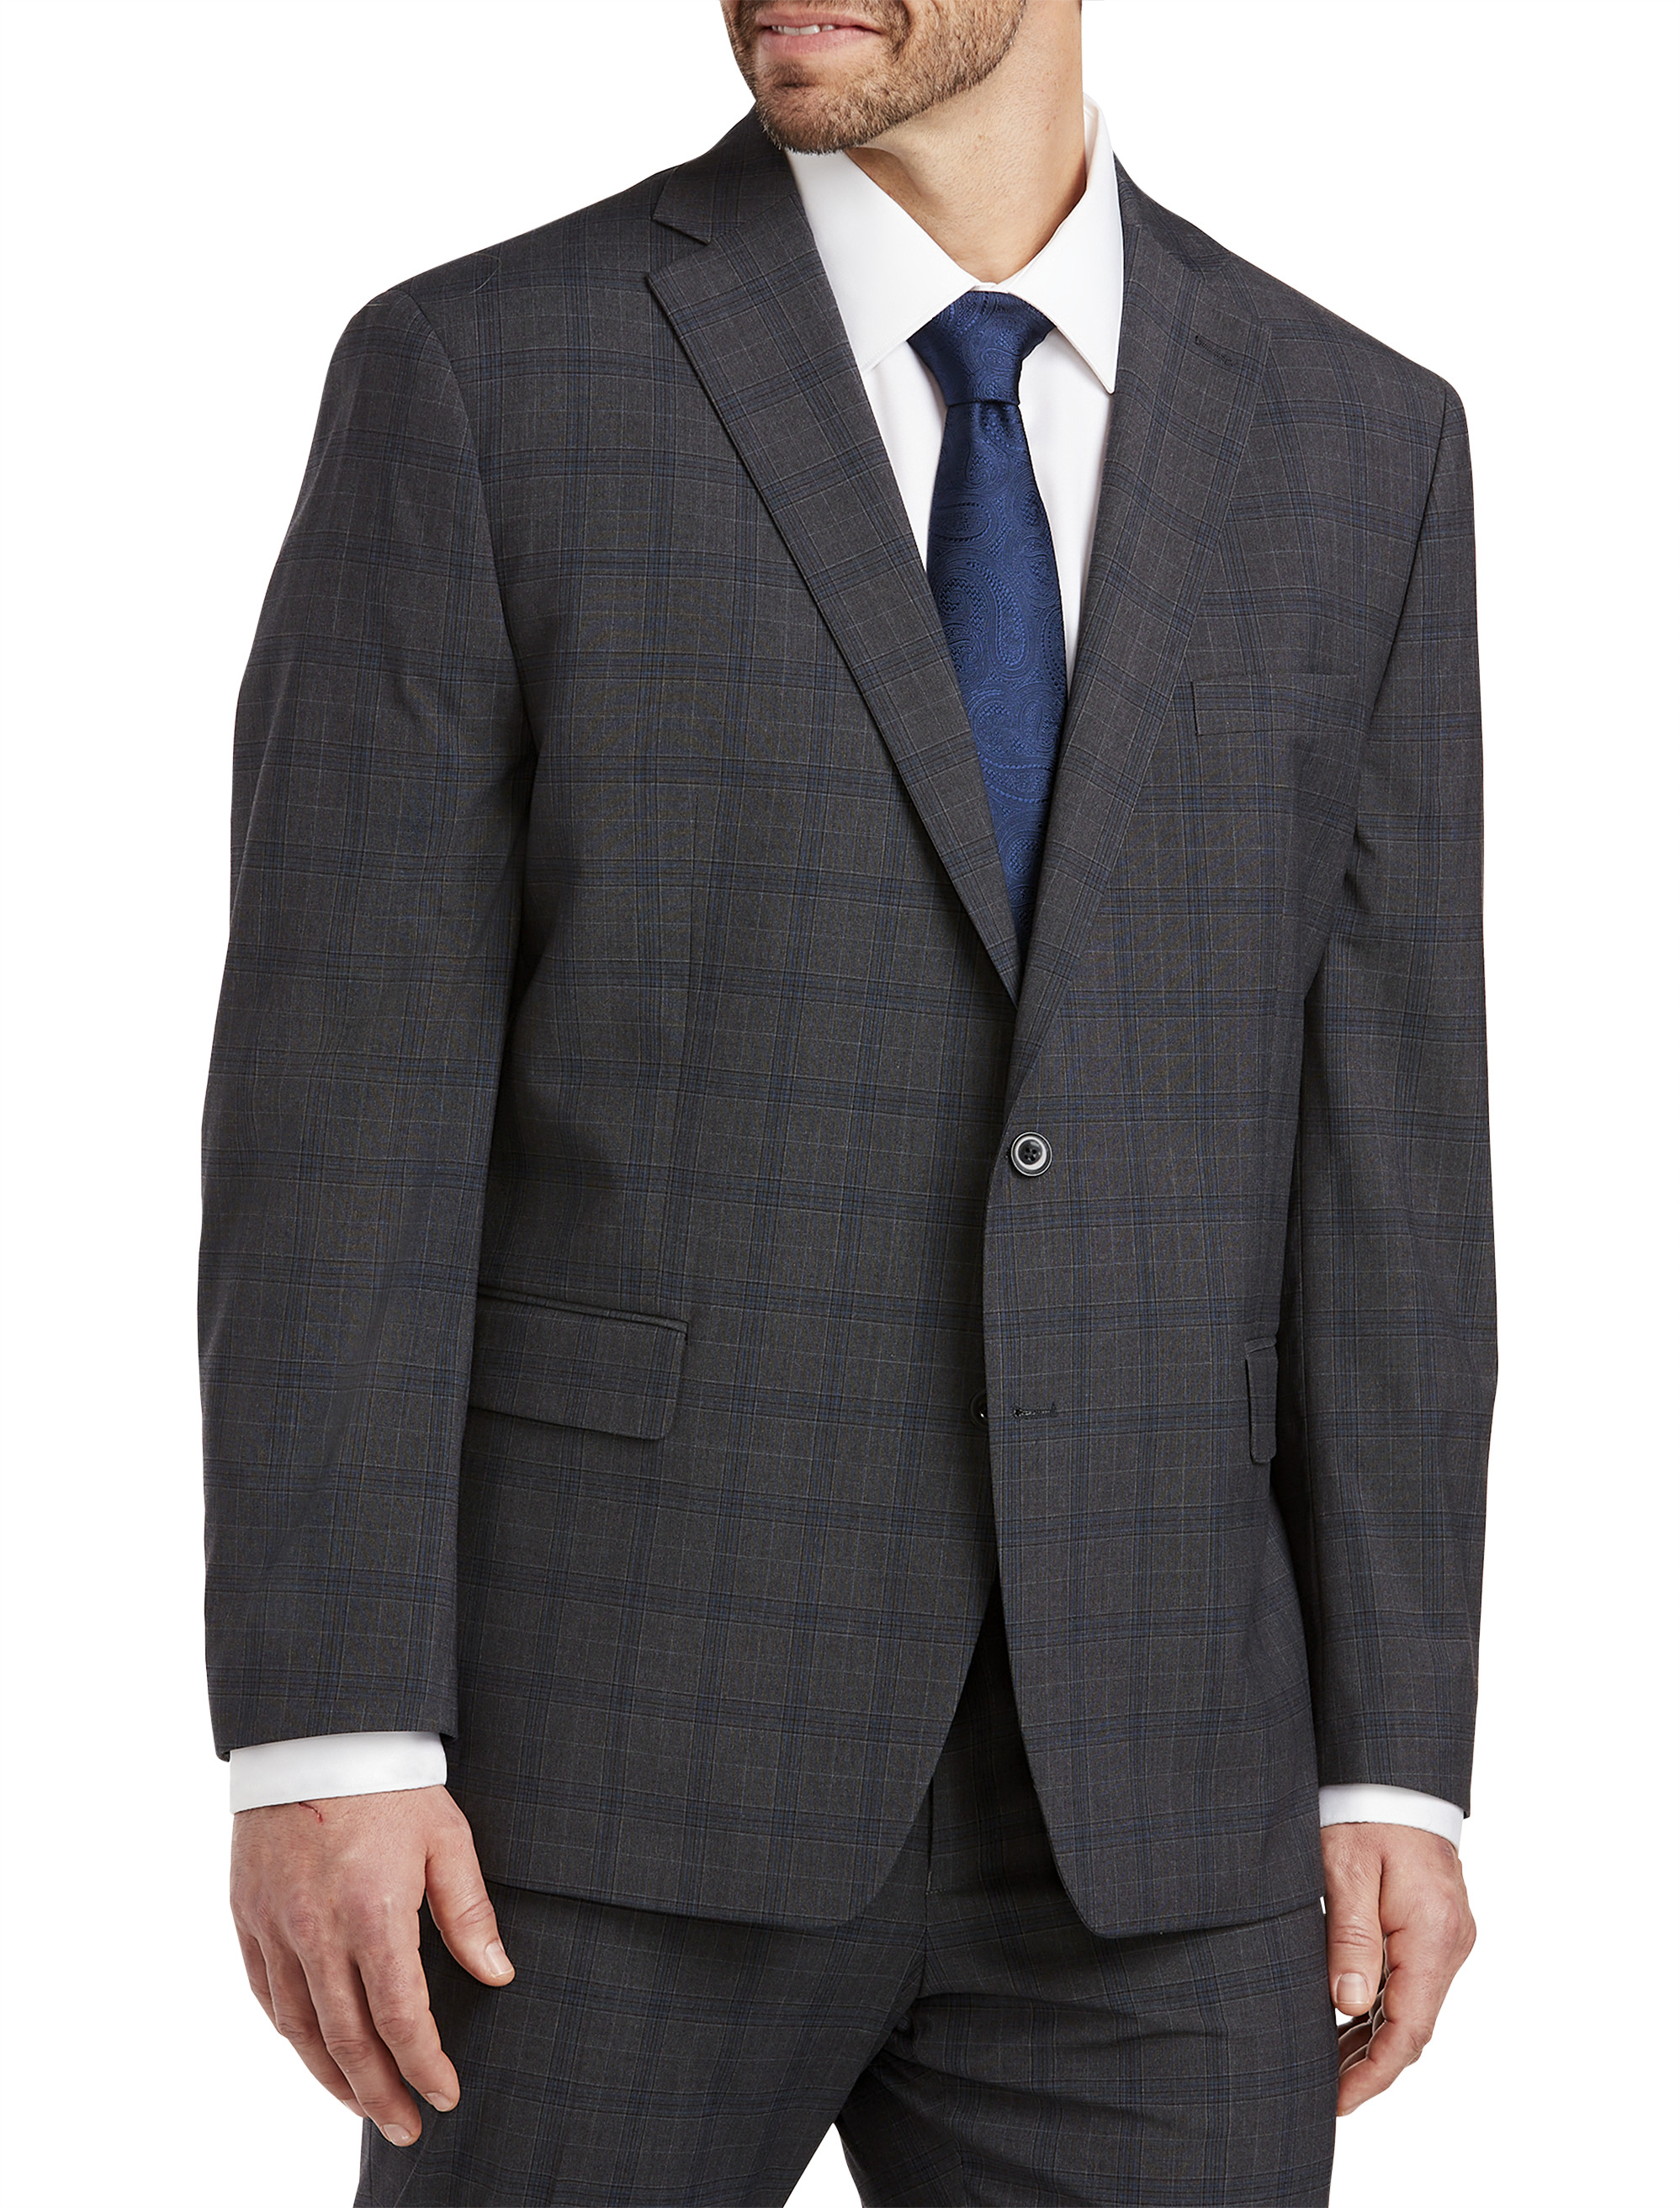 Big + Tall | Michael Kors Windowpane Suit Jacket | DXL